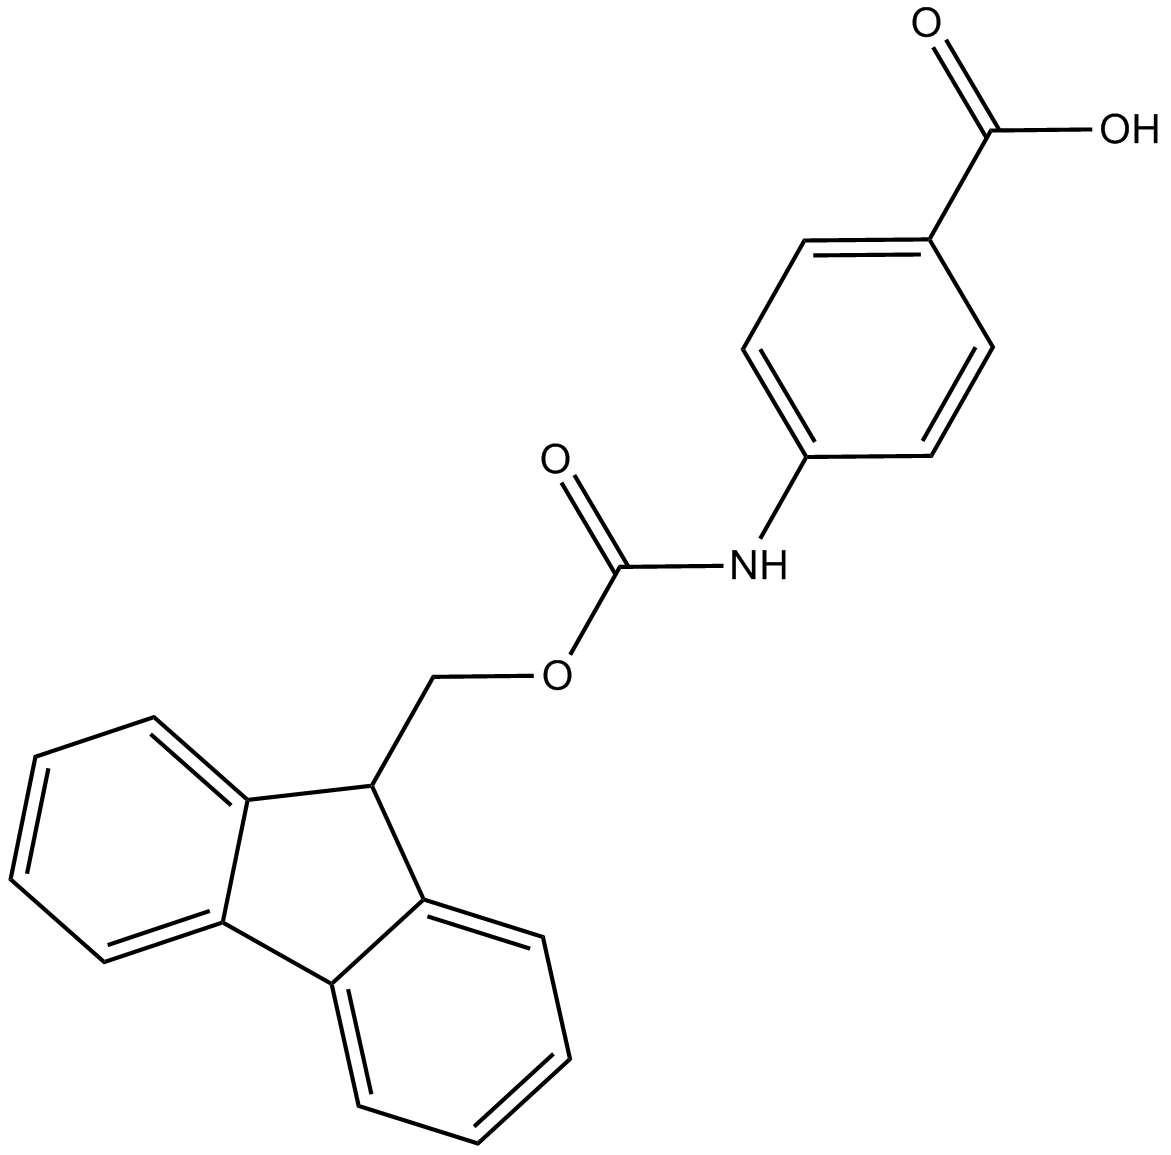 Fmoc-p-amino-benzoic acid,Fmoc-4-Abz-OH